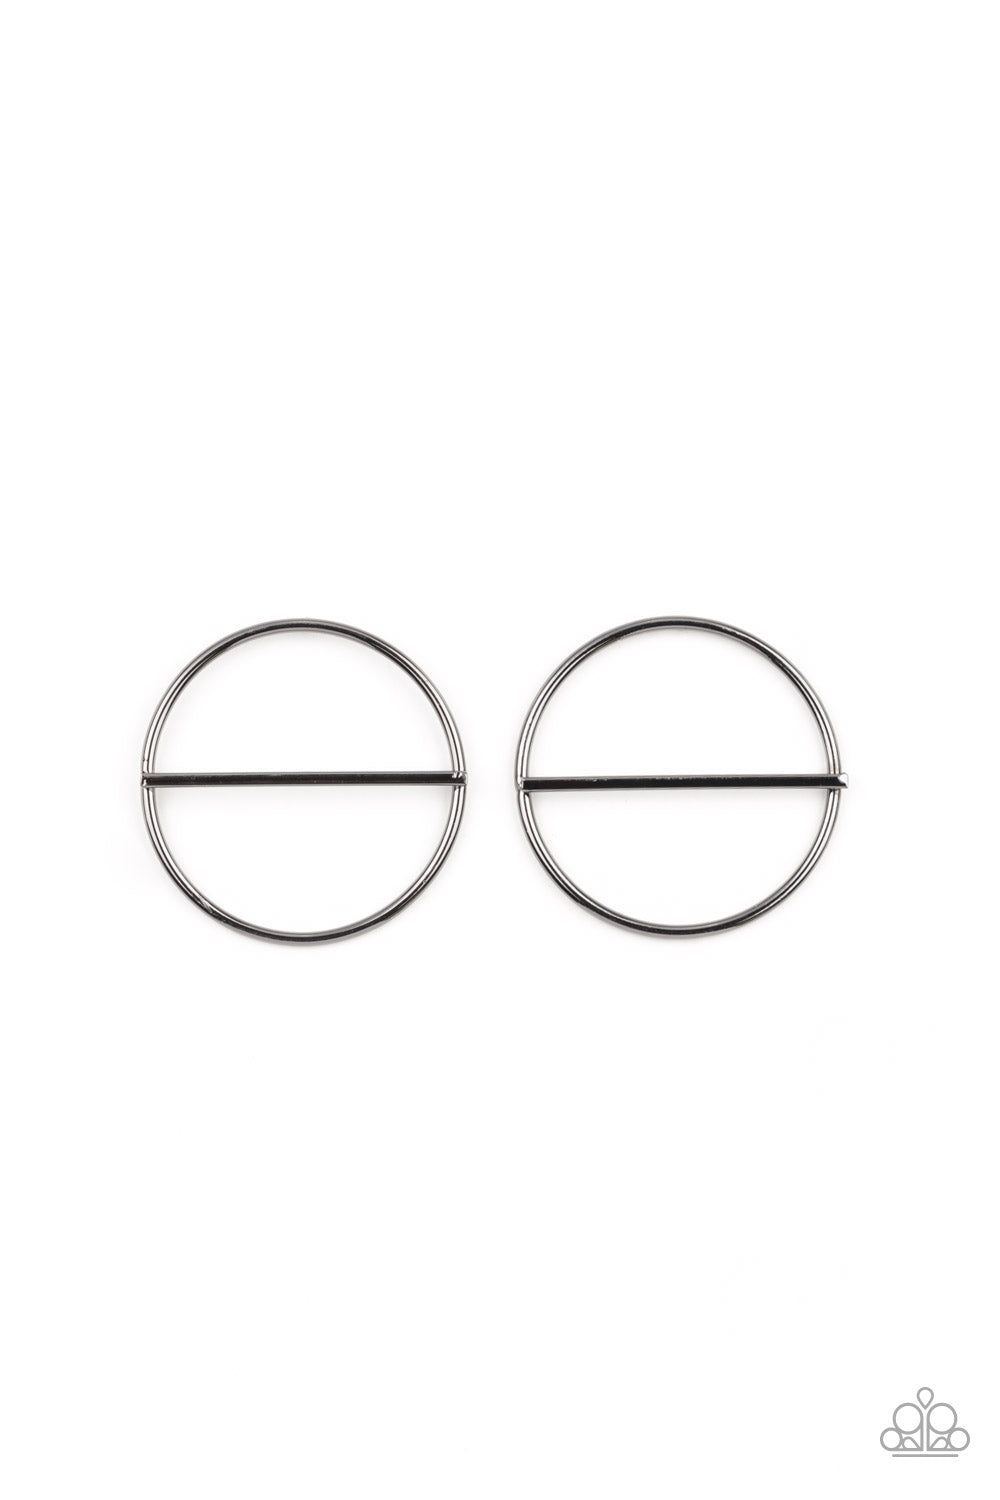 Dynamic Diameter - black - Paparazzi earrings